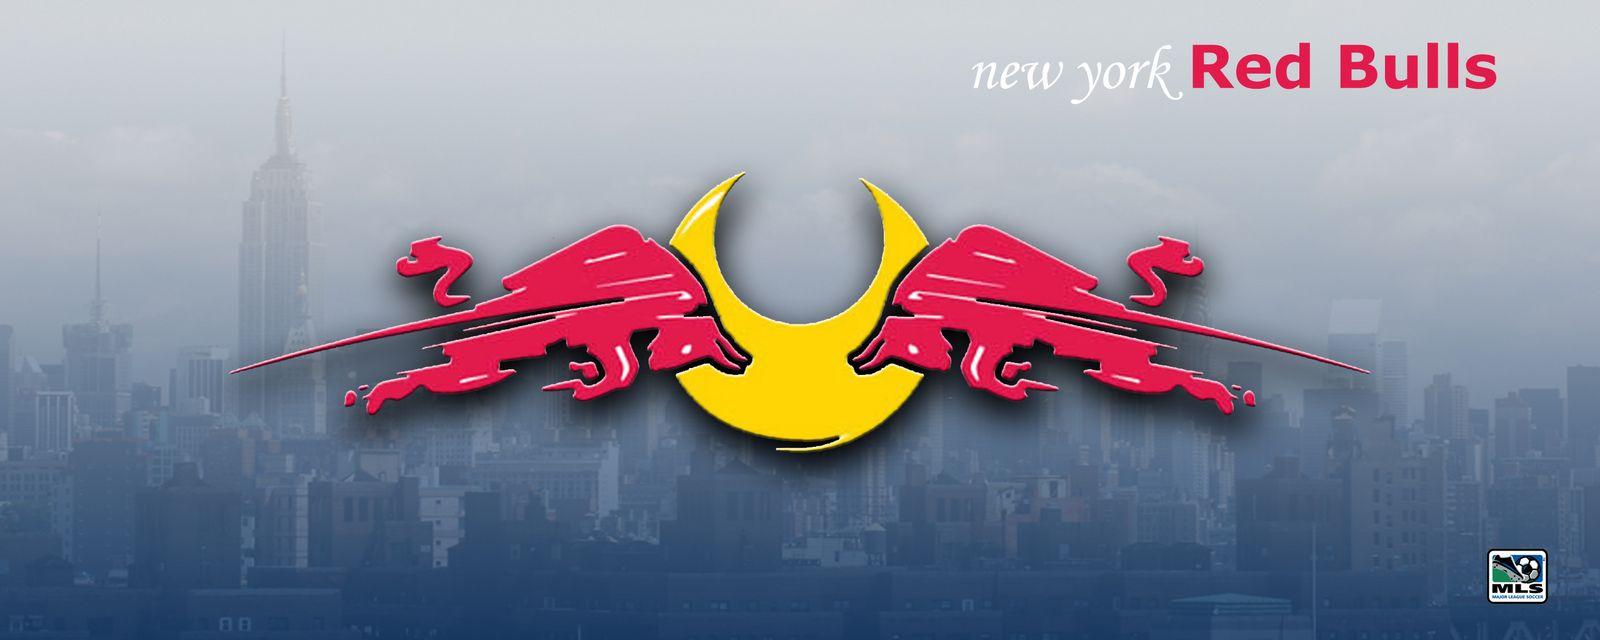 Red Bull Soccer Logo - New York Red Bulls Wallpaper - WallpaperSafari